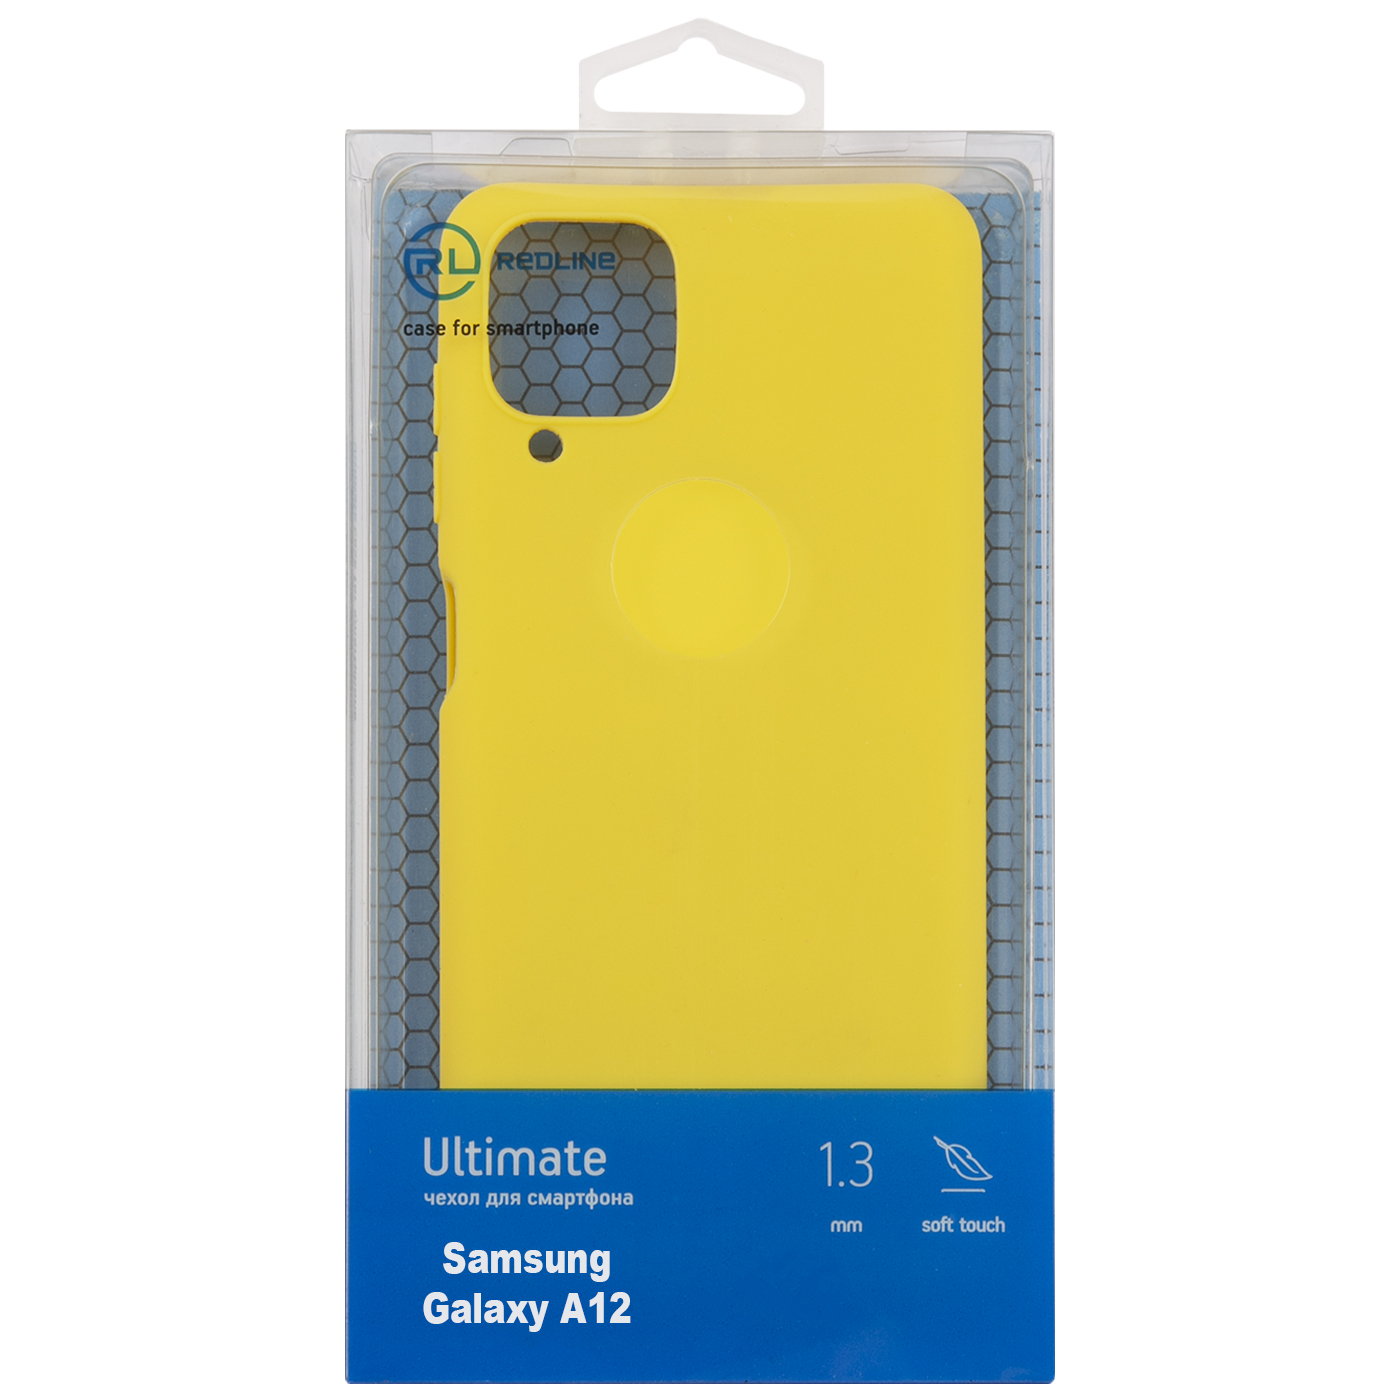 Чехол защитный Red Line Ultimate для Samsung Galaxy A12, желтый УТ000023601 чехол red line для oppo a12 ultimate black ут000036027